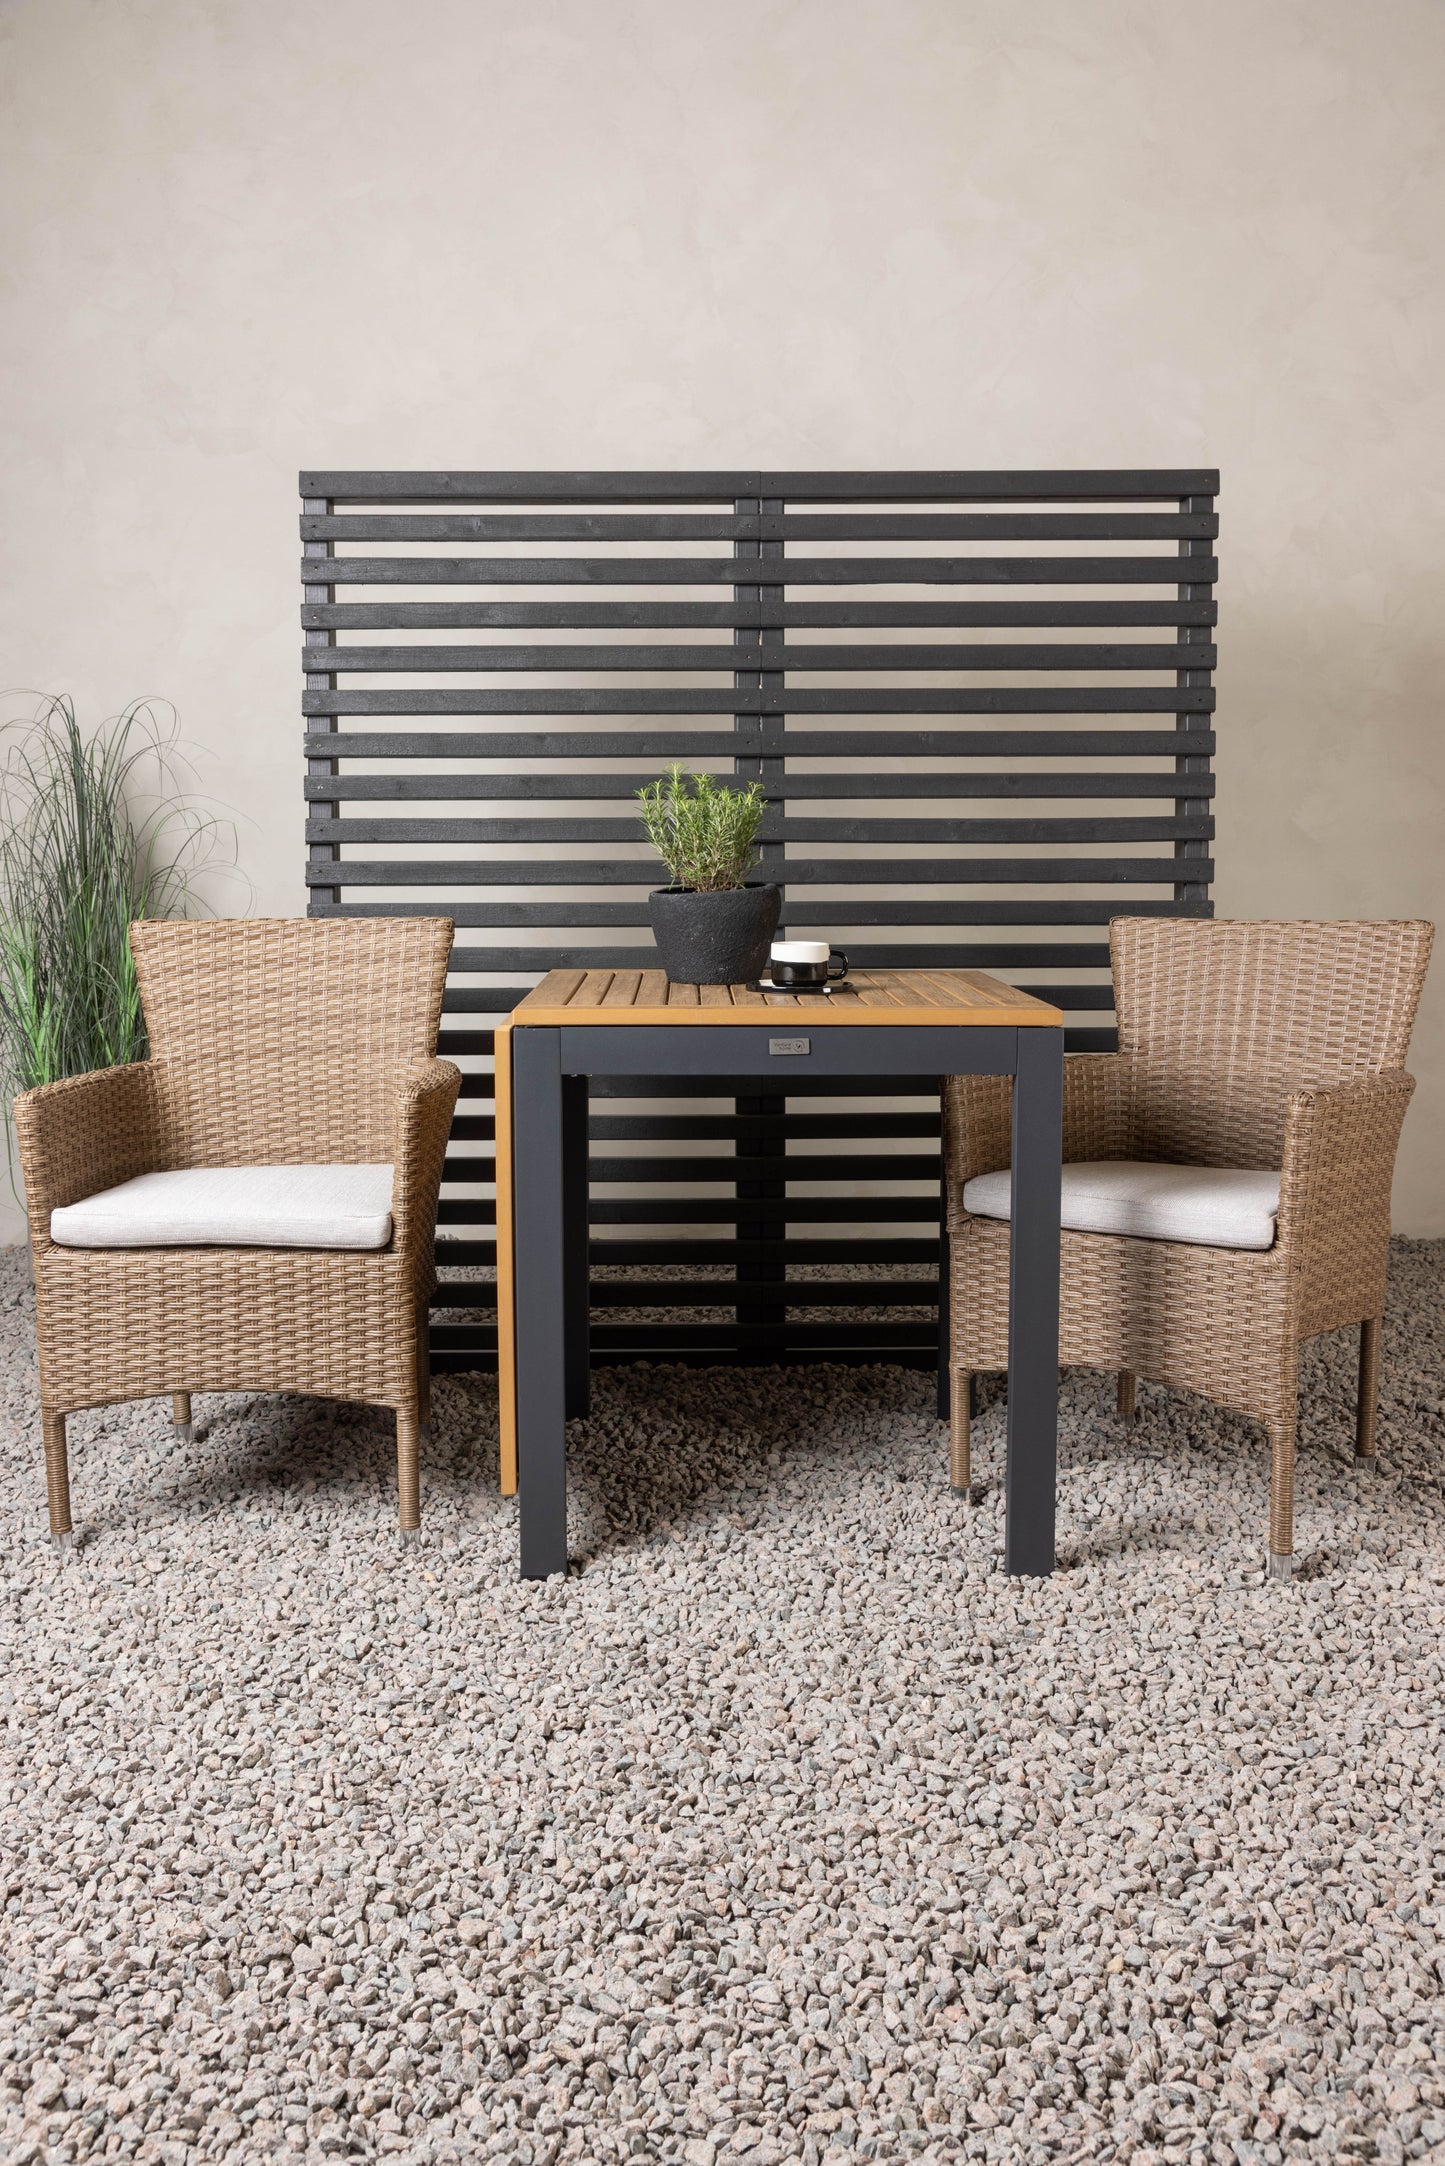 Diego - Cafébord, Aluminium - Sort / Brun Nonwood - Rektangulær 70*70/130* + Malia stol Aluminium - Natur / flet